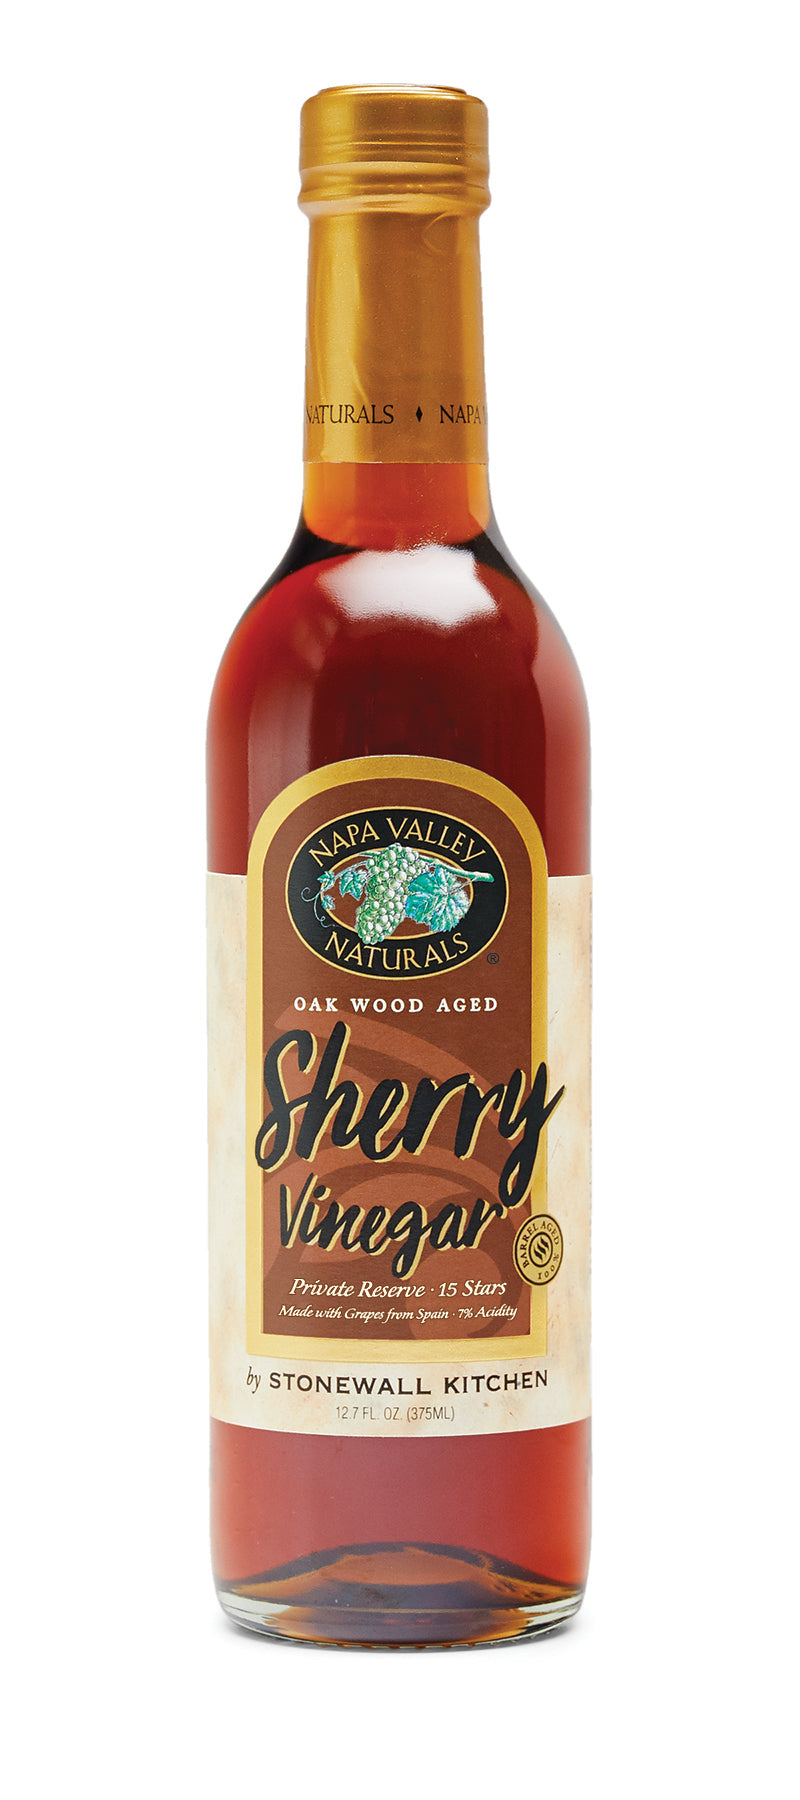 Napa Valley Naturals Sherry Vinegar - Olive Oil Etcetera 